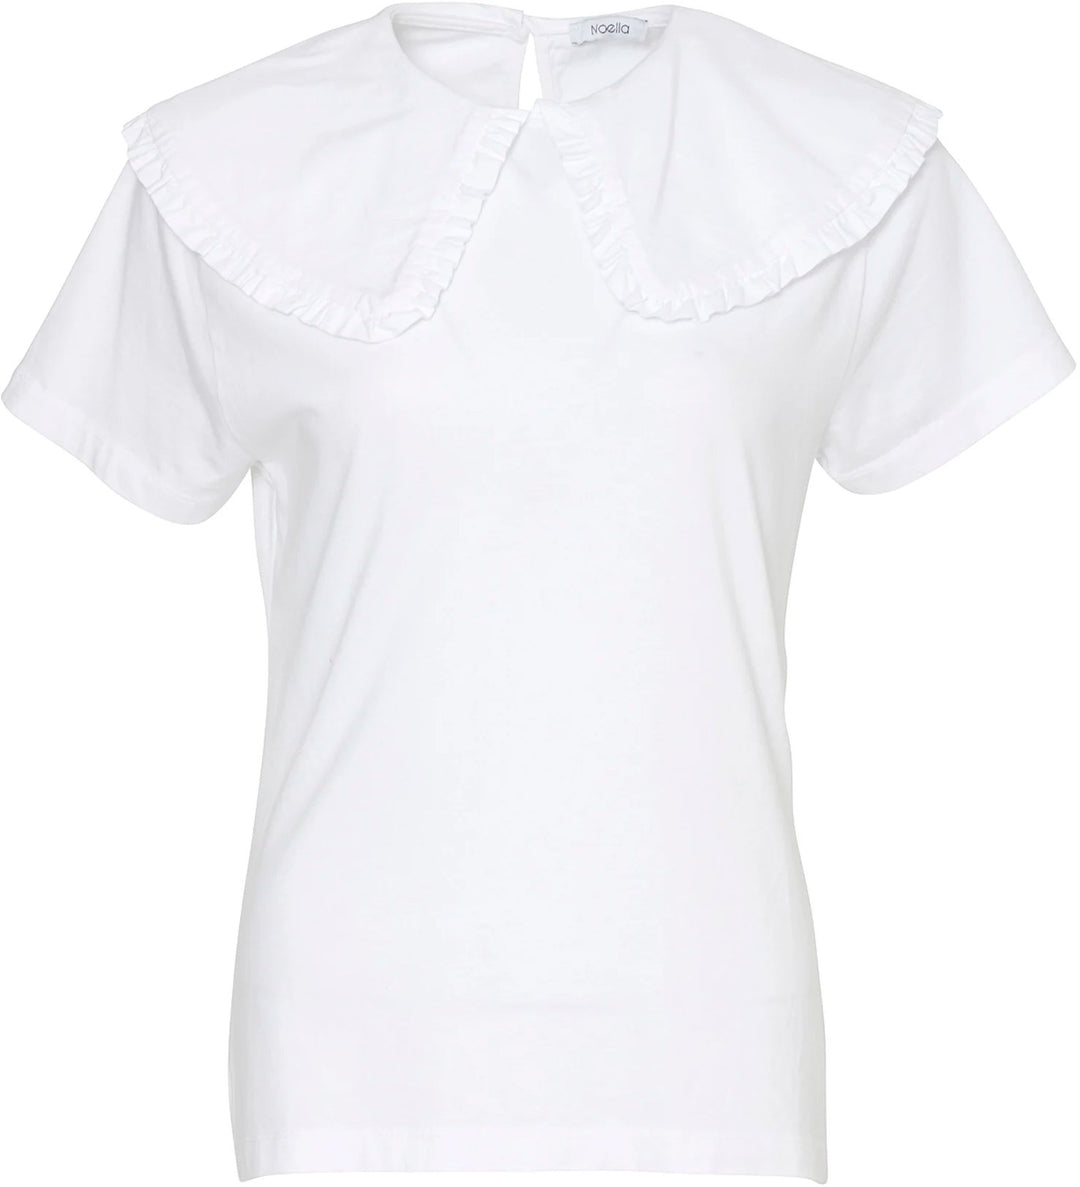 Noella - Dex Tee Cotton - White T-shirts 